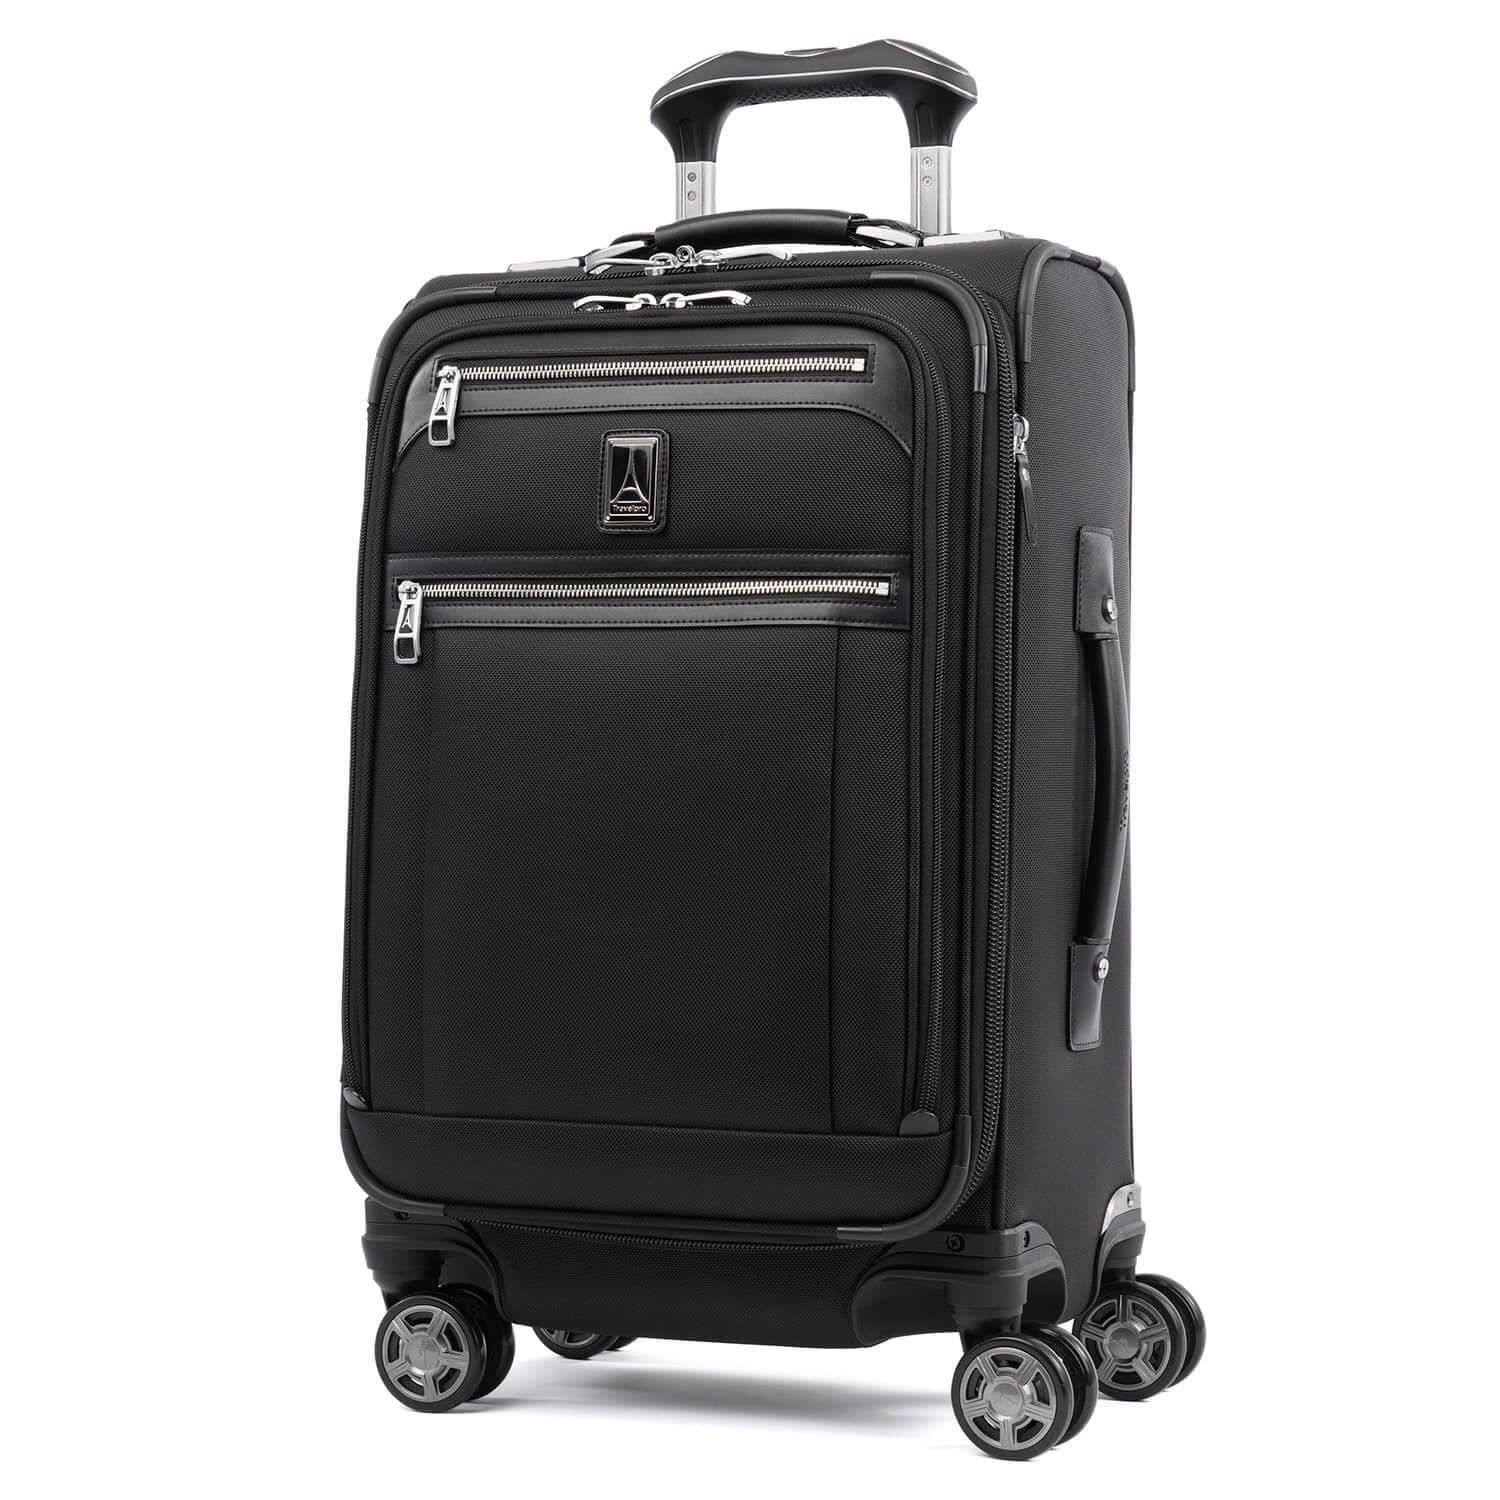 travelpro platinum elite 21 black carry on suitcase black wheels silver zippers black handle black travelpro logo